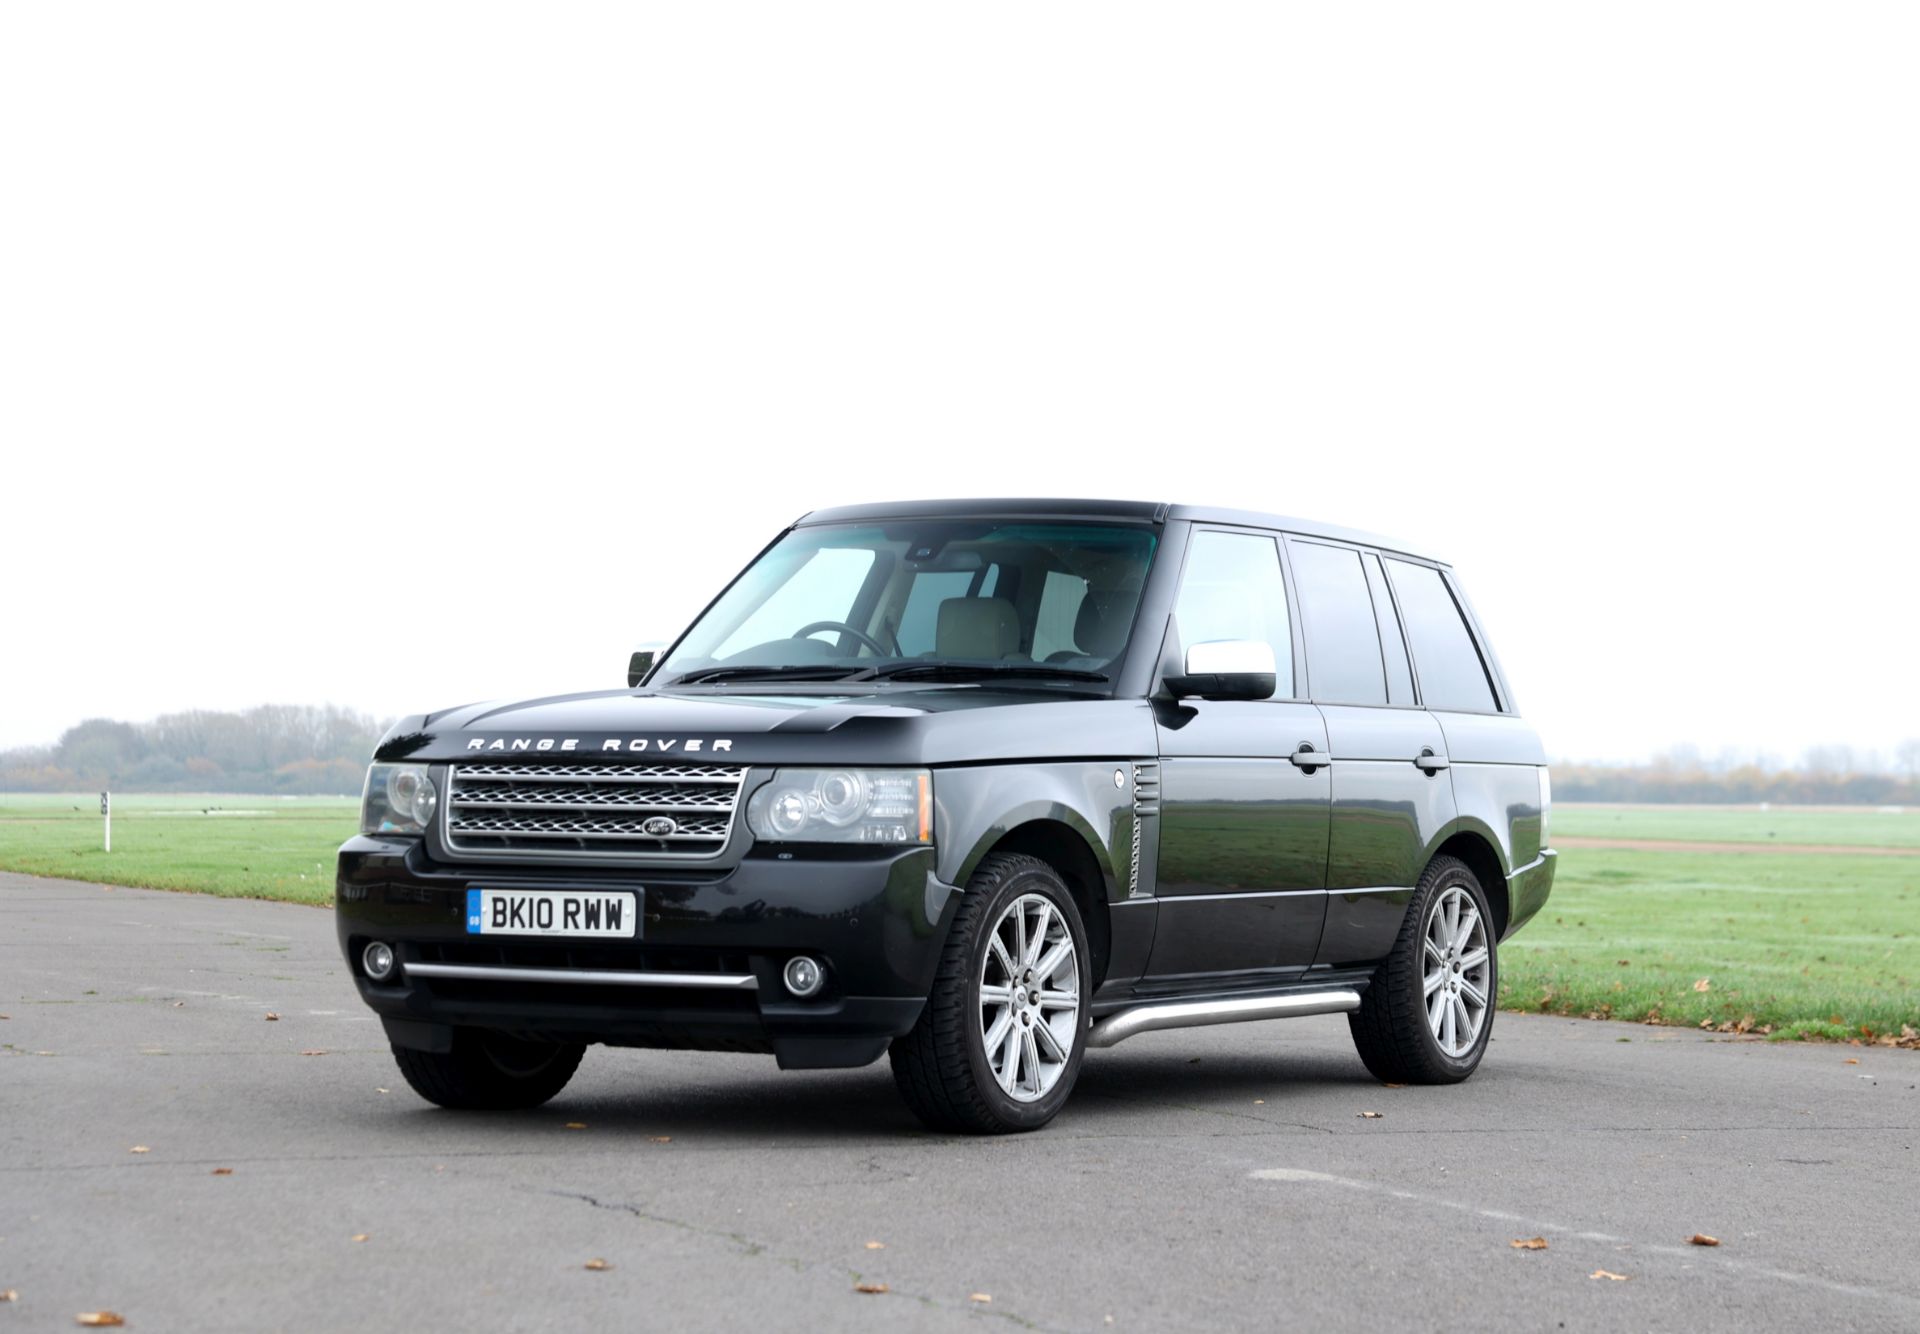 2010 Land Rover Range Rover Autobiography 4x4 Estate Chassis no. SALLMAME3AA322468